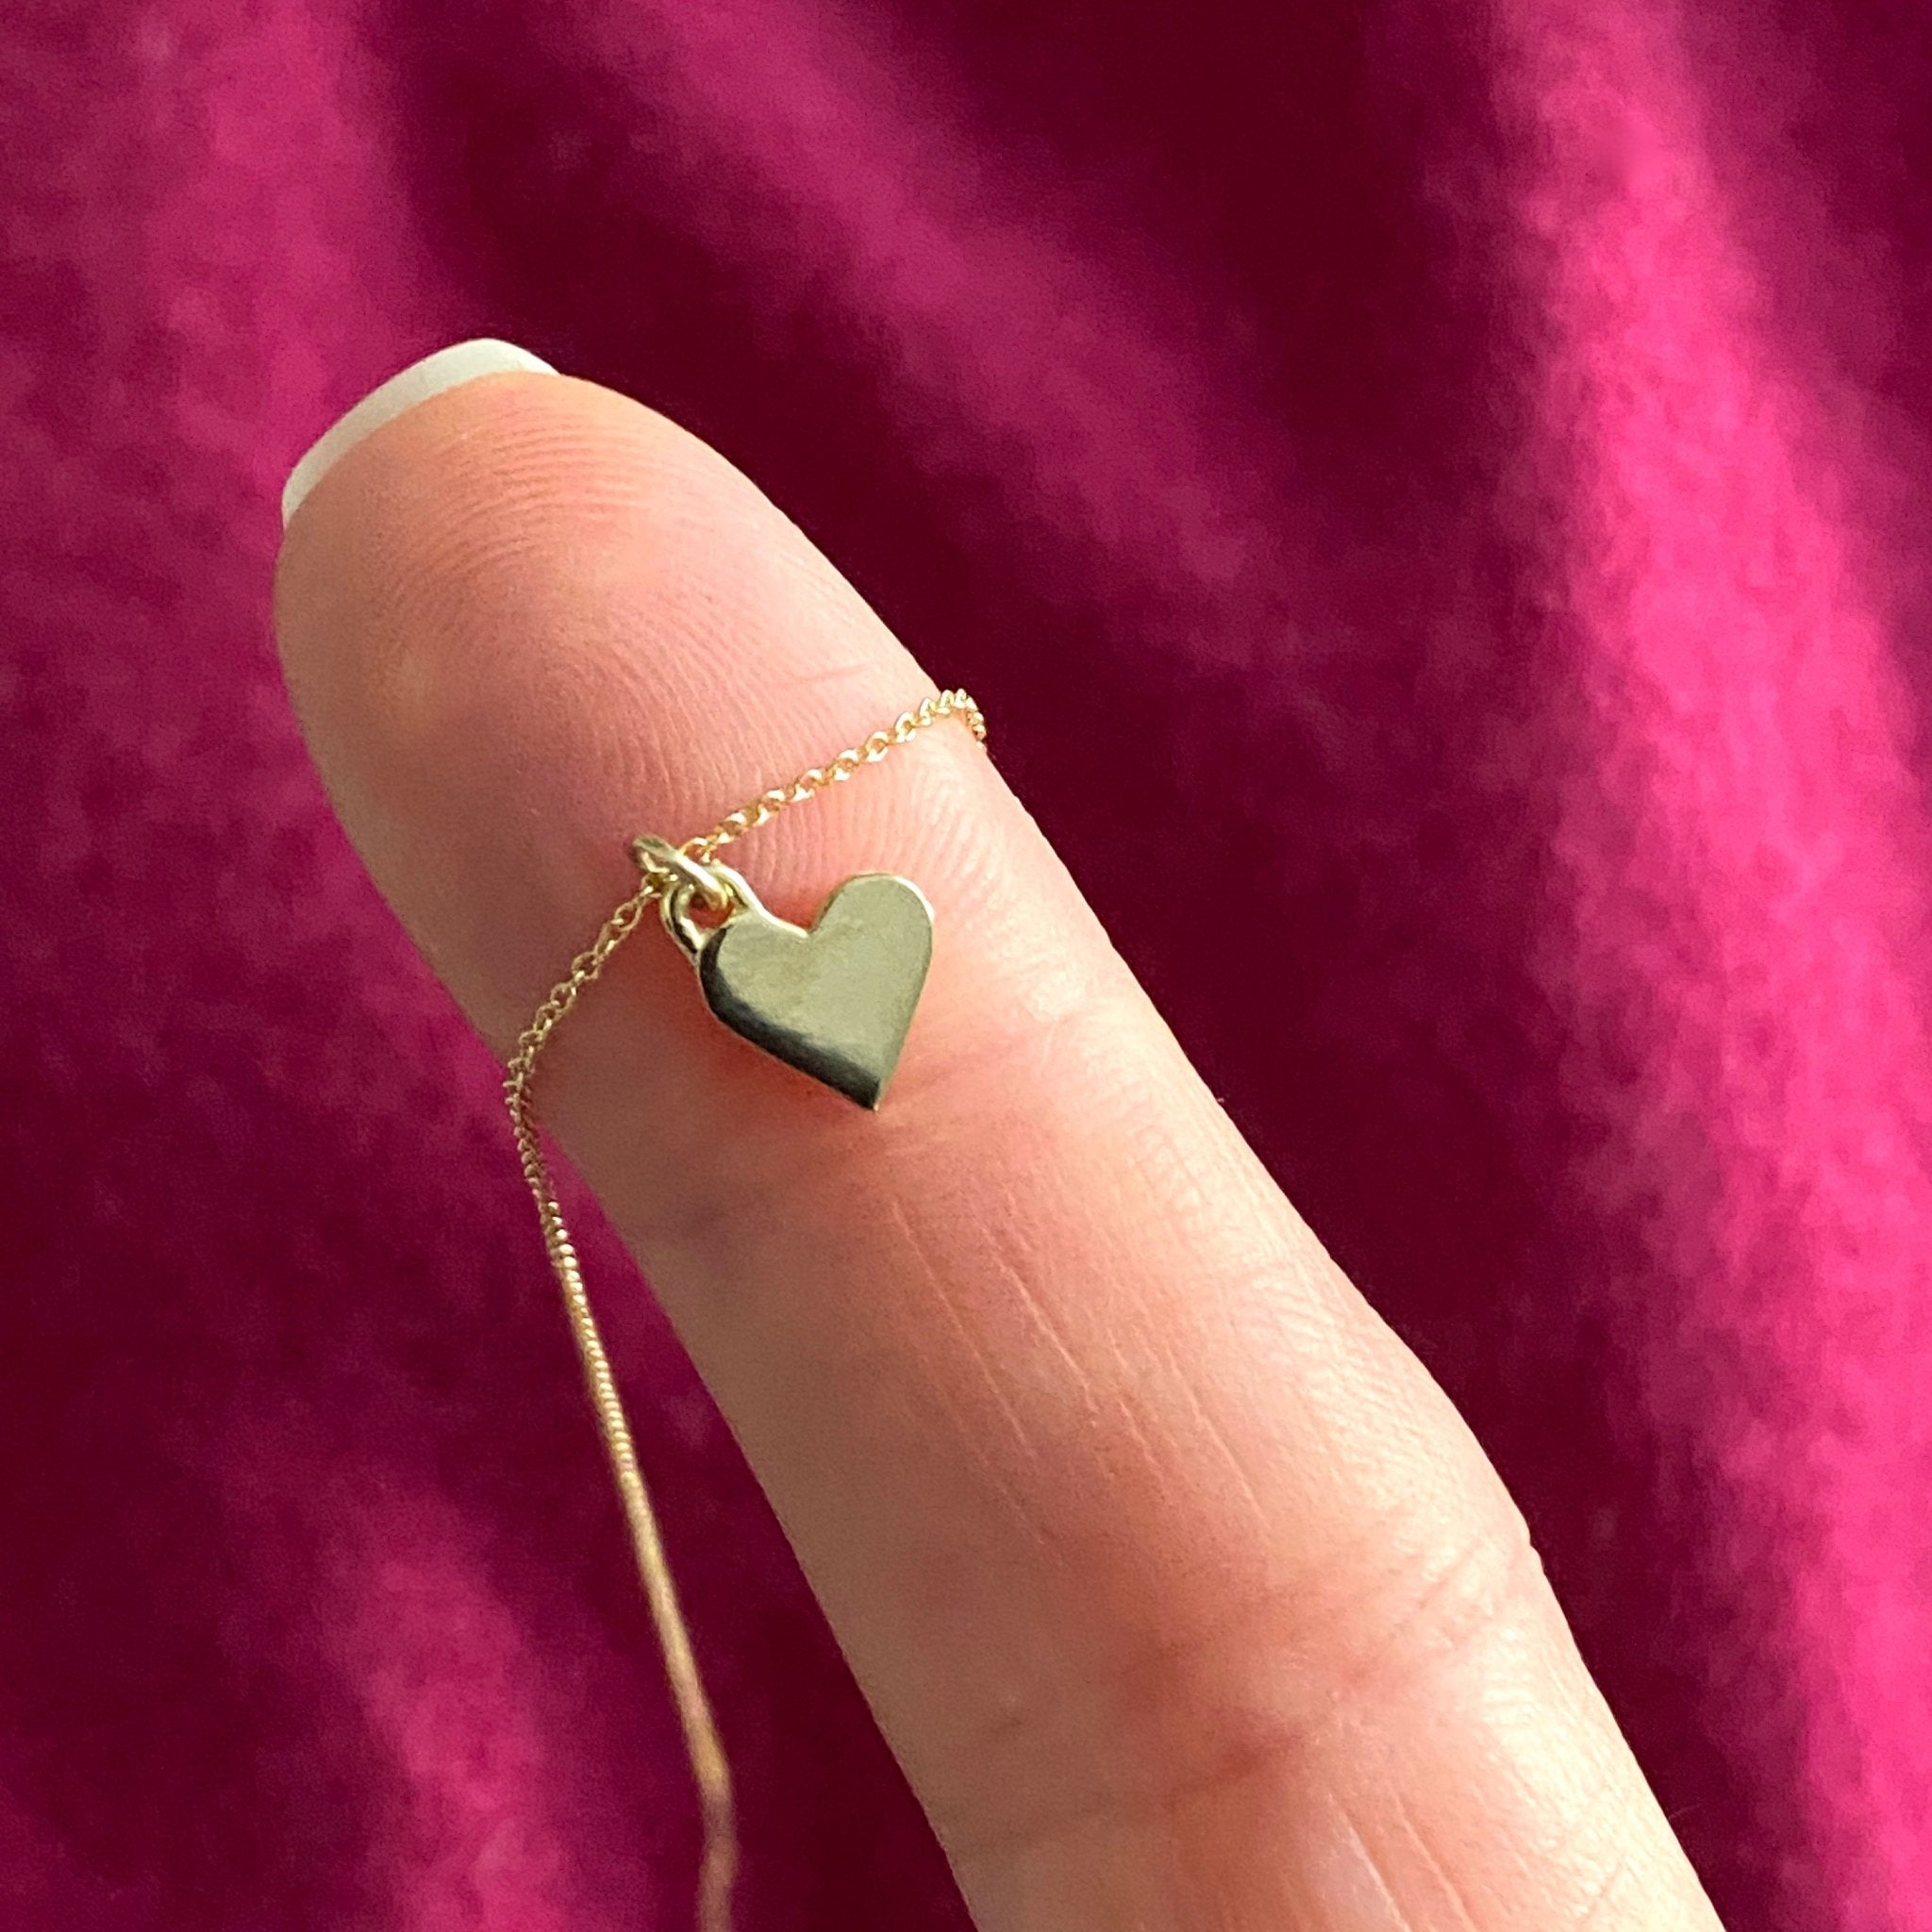 14k Gold Sigma Kappa Heart Necklace | mazi + zo sorority jewelry